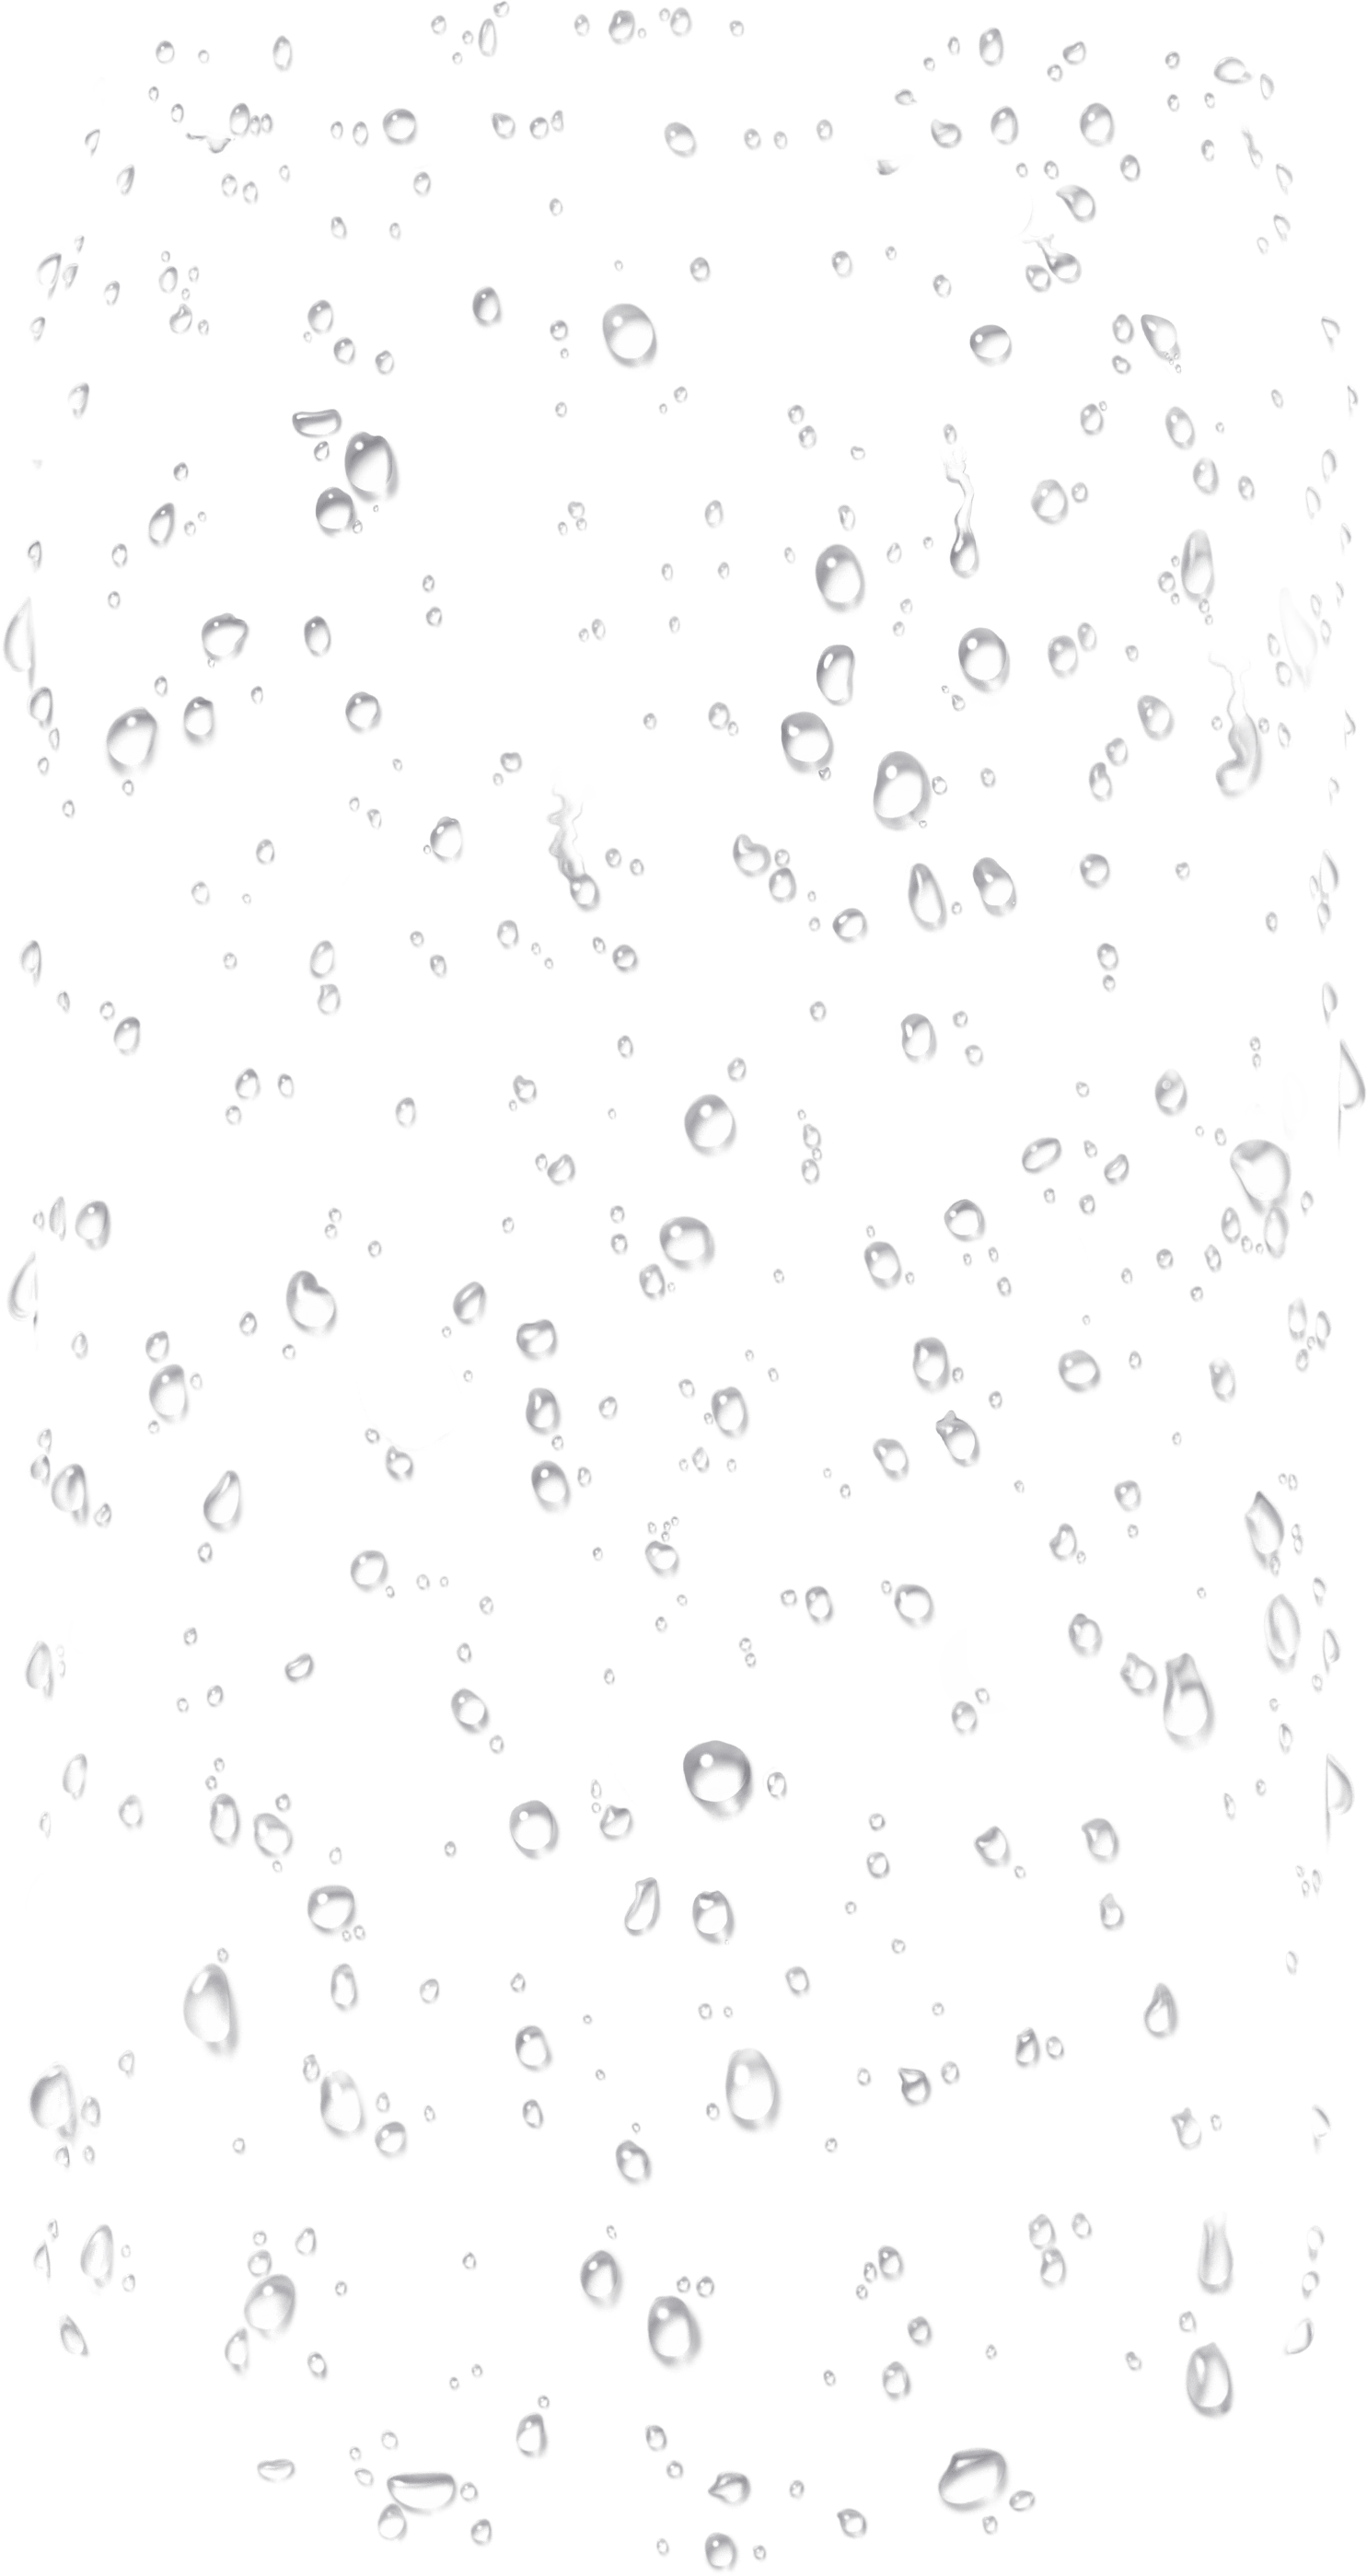 Water Drops Png Image PNG Image